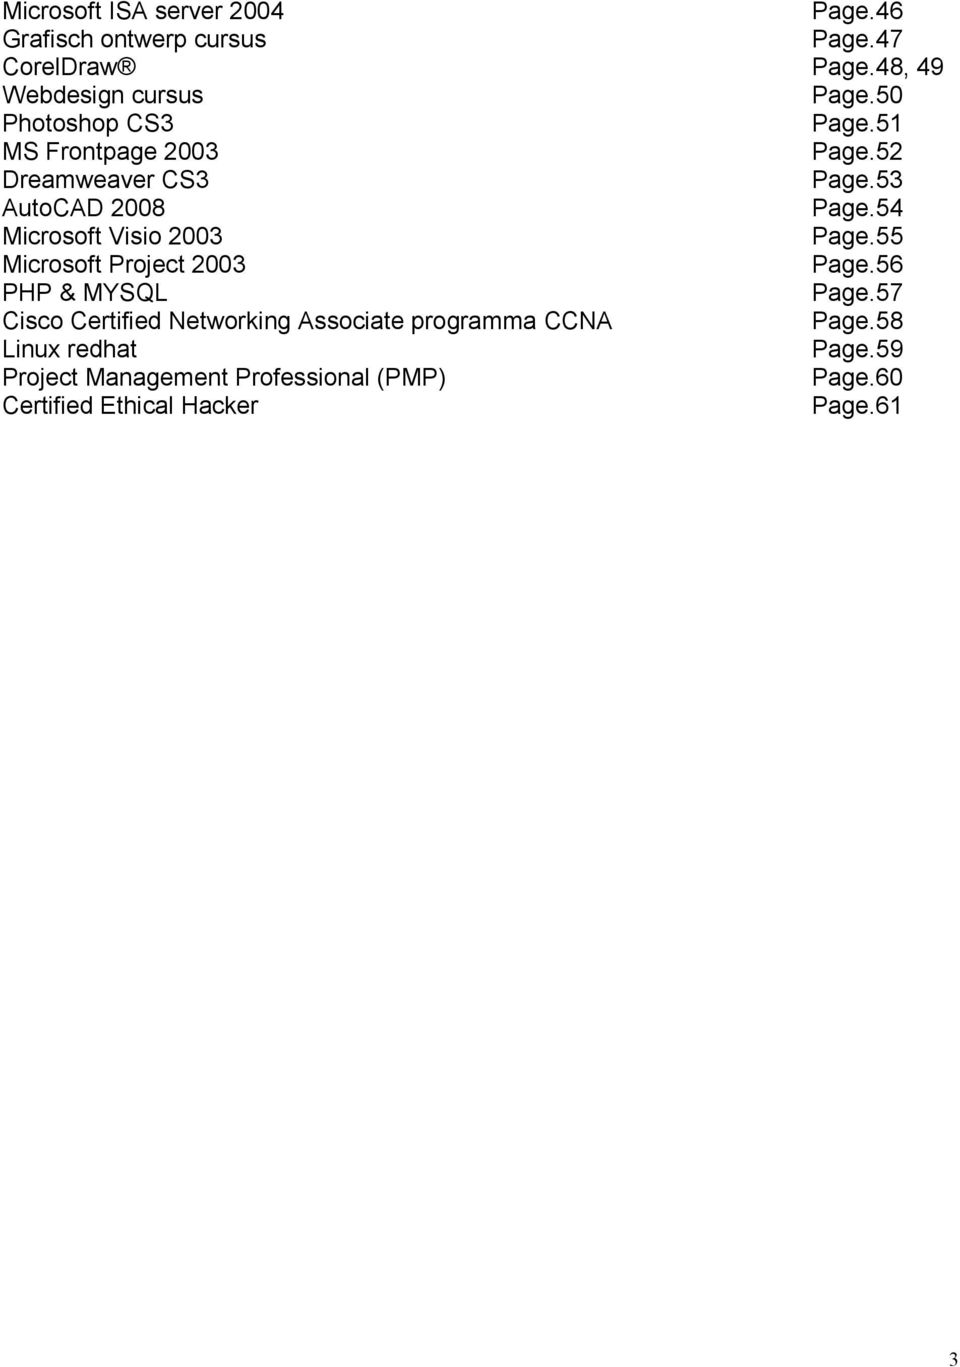 54 Microsoft Visio 2003 Page.55 Microsoft Project 2003 Page.56 PHP & MYSQL Page.